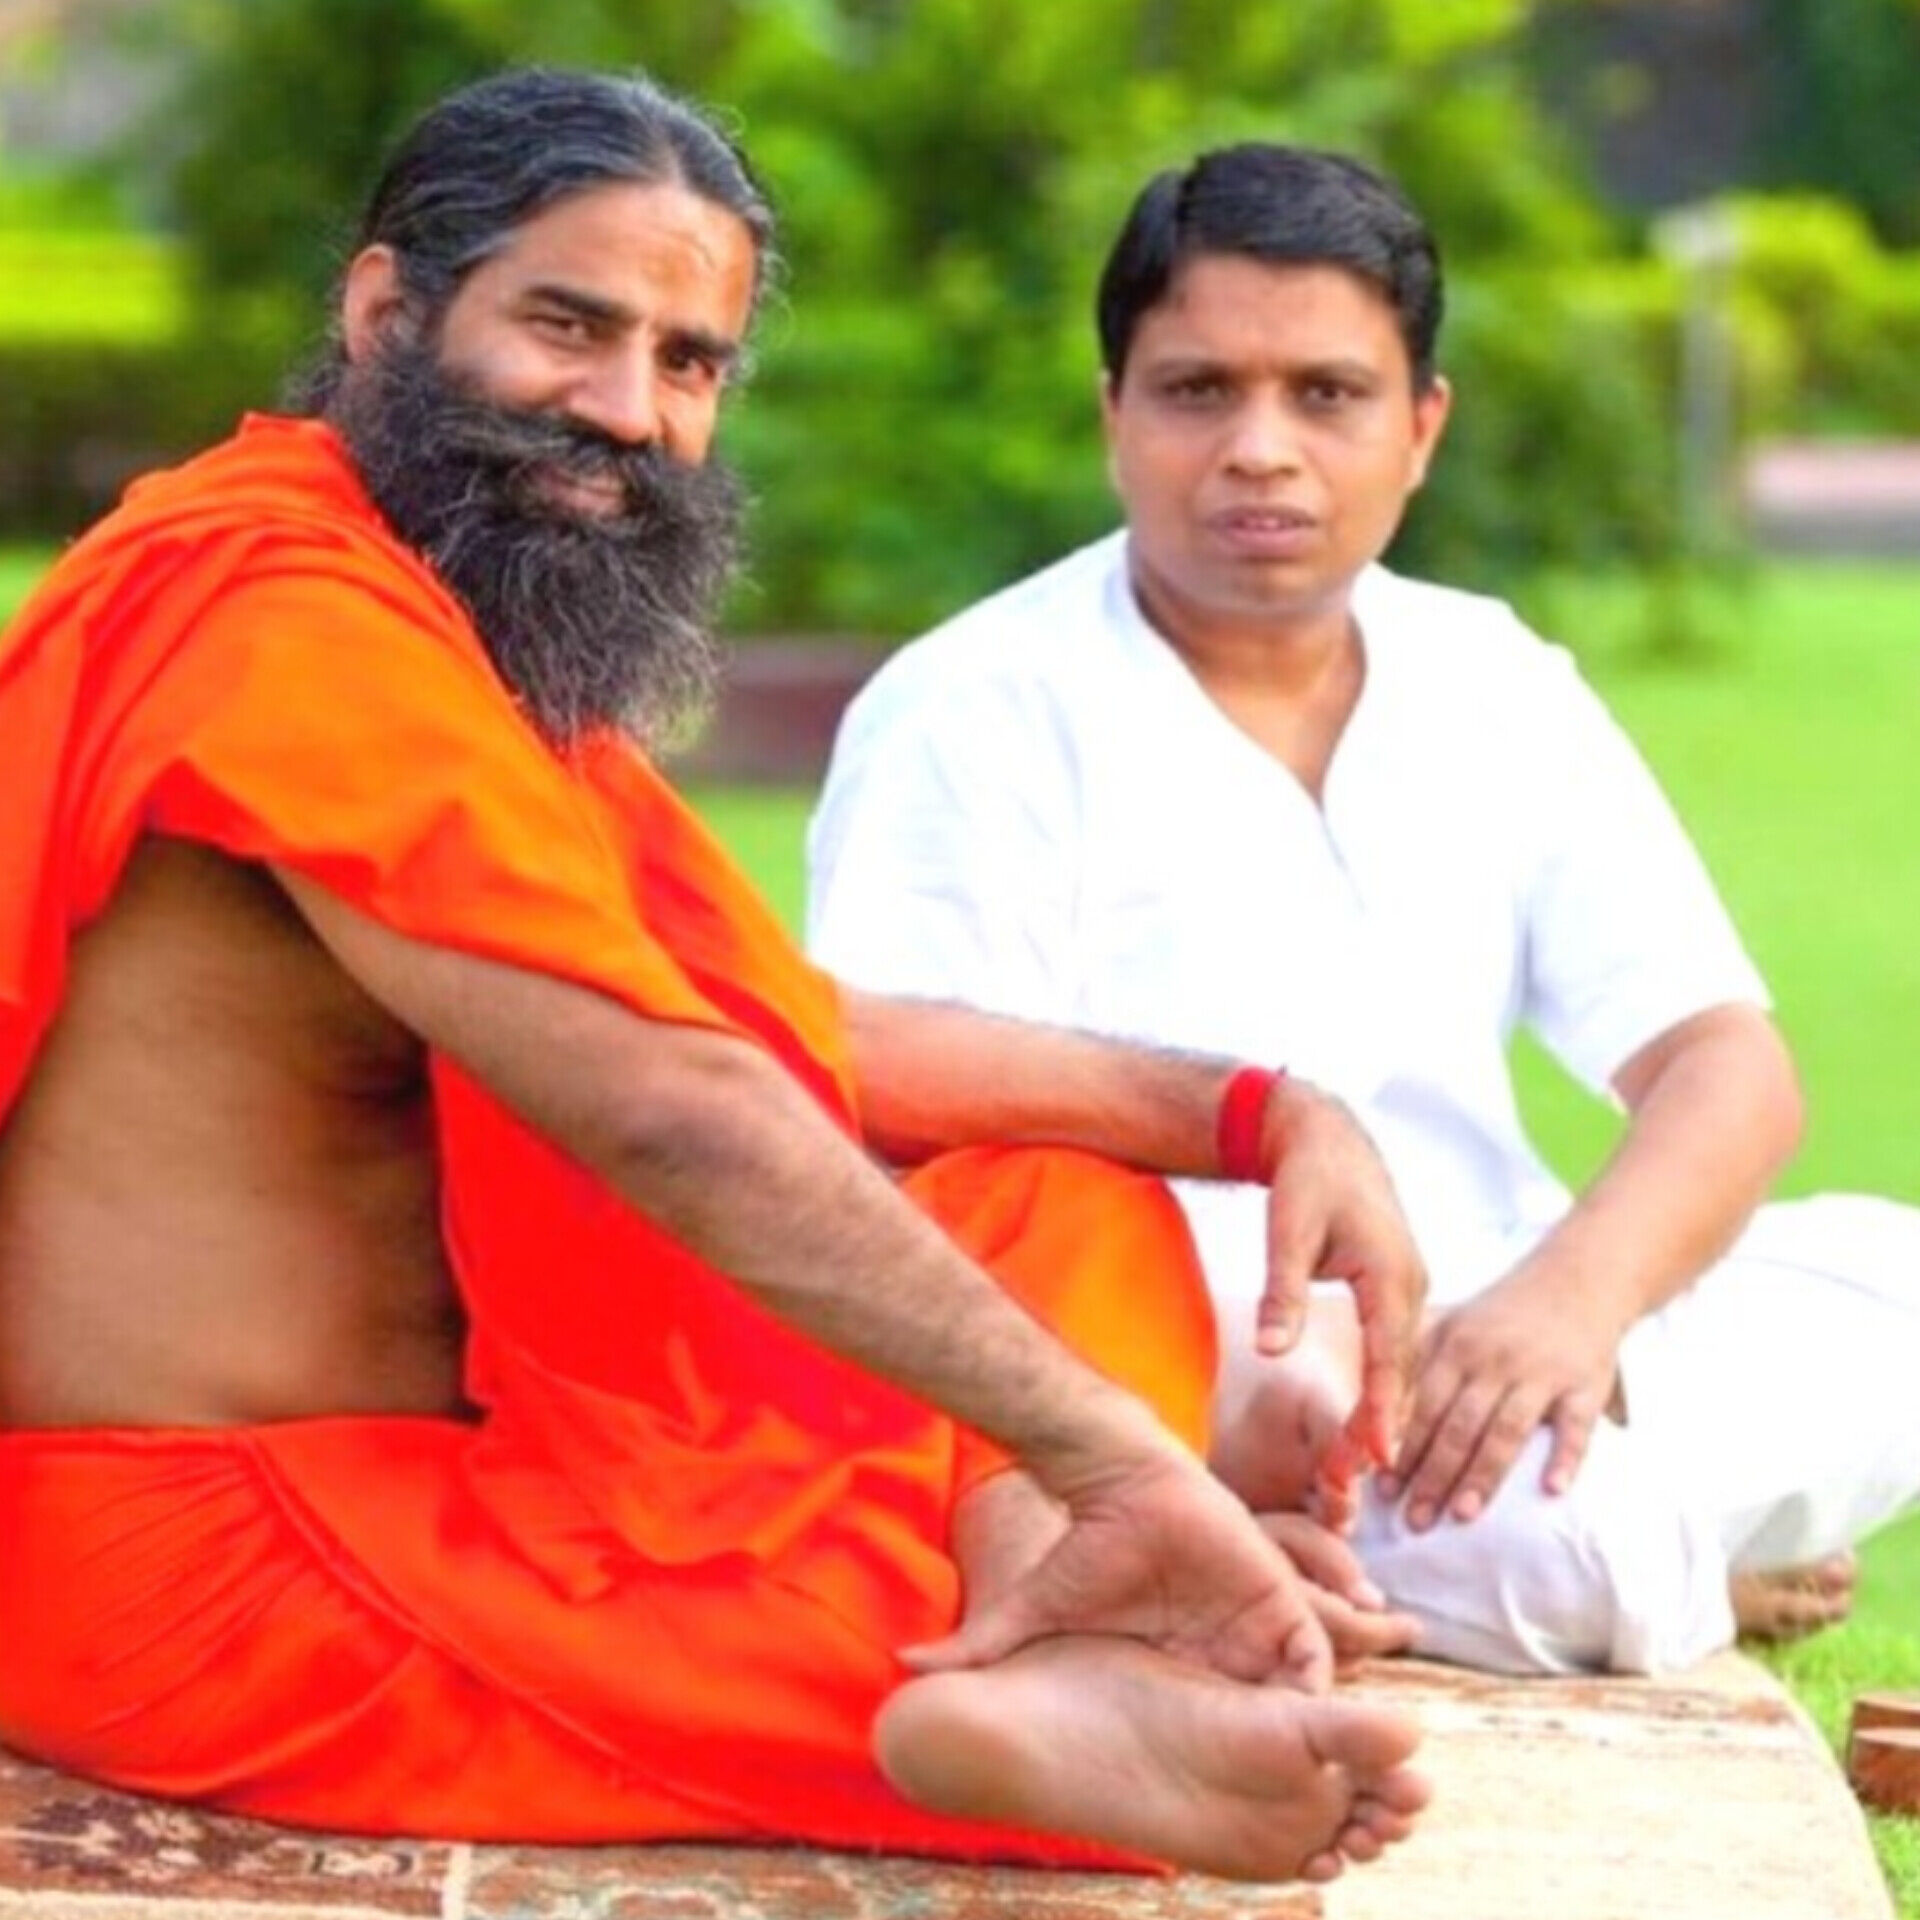 योग गुरु रामदेव और बालकृष्ण ने सुप्रीम कोर्ट में माफीनामा पेश किया, अगली सुनवाई 30 अप्रैल को